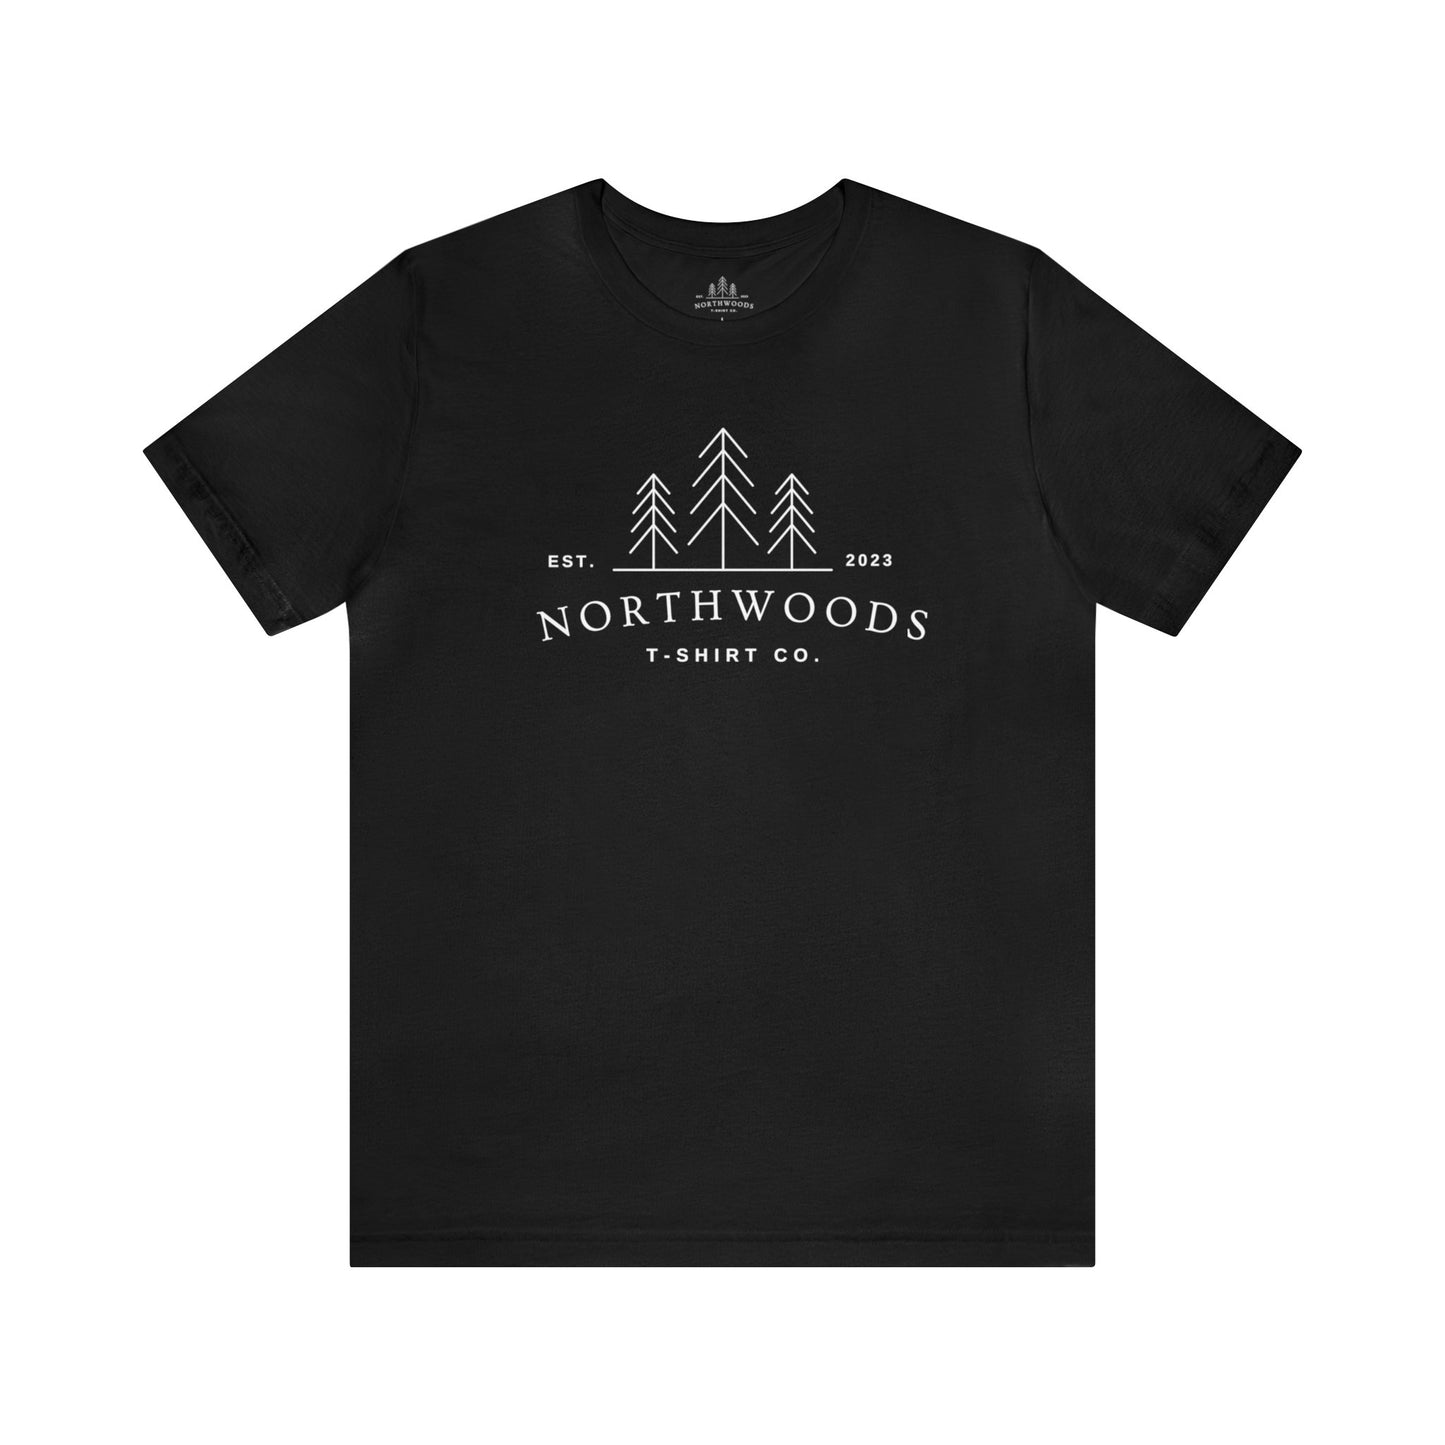 Northwoods T-Shirt Co. Logo Tee